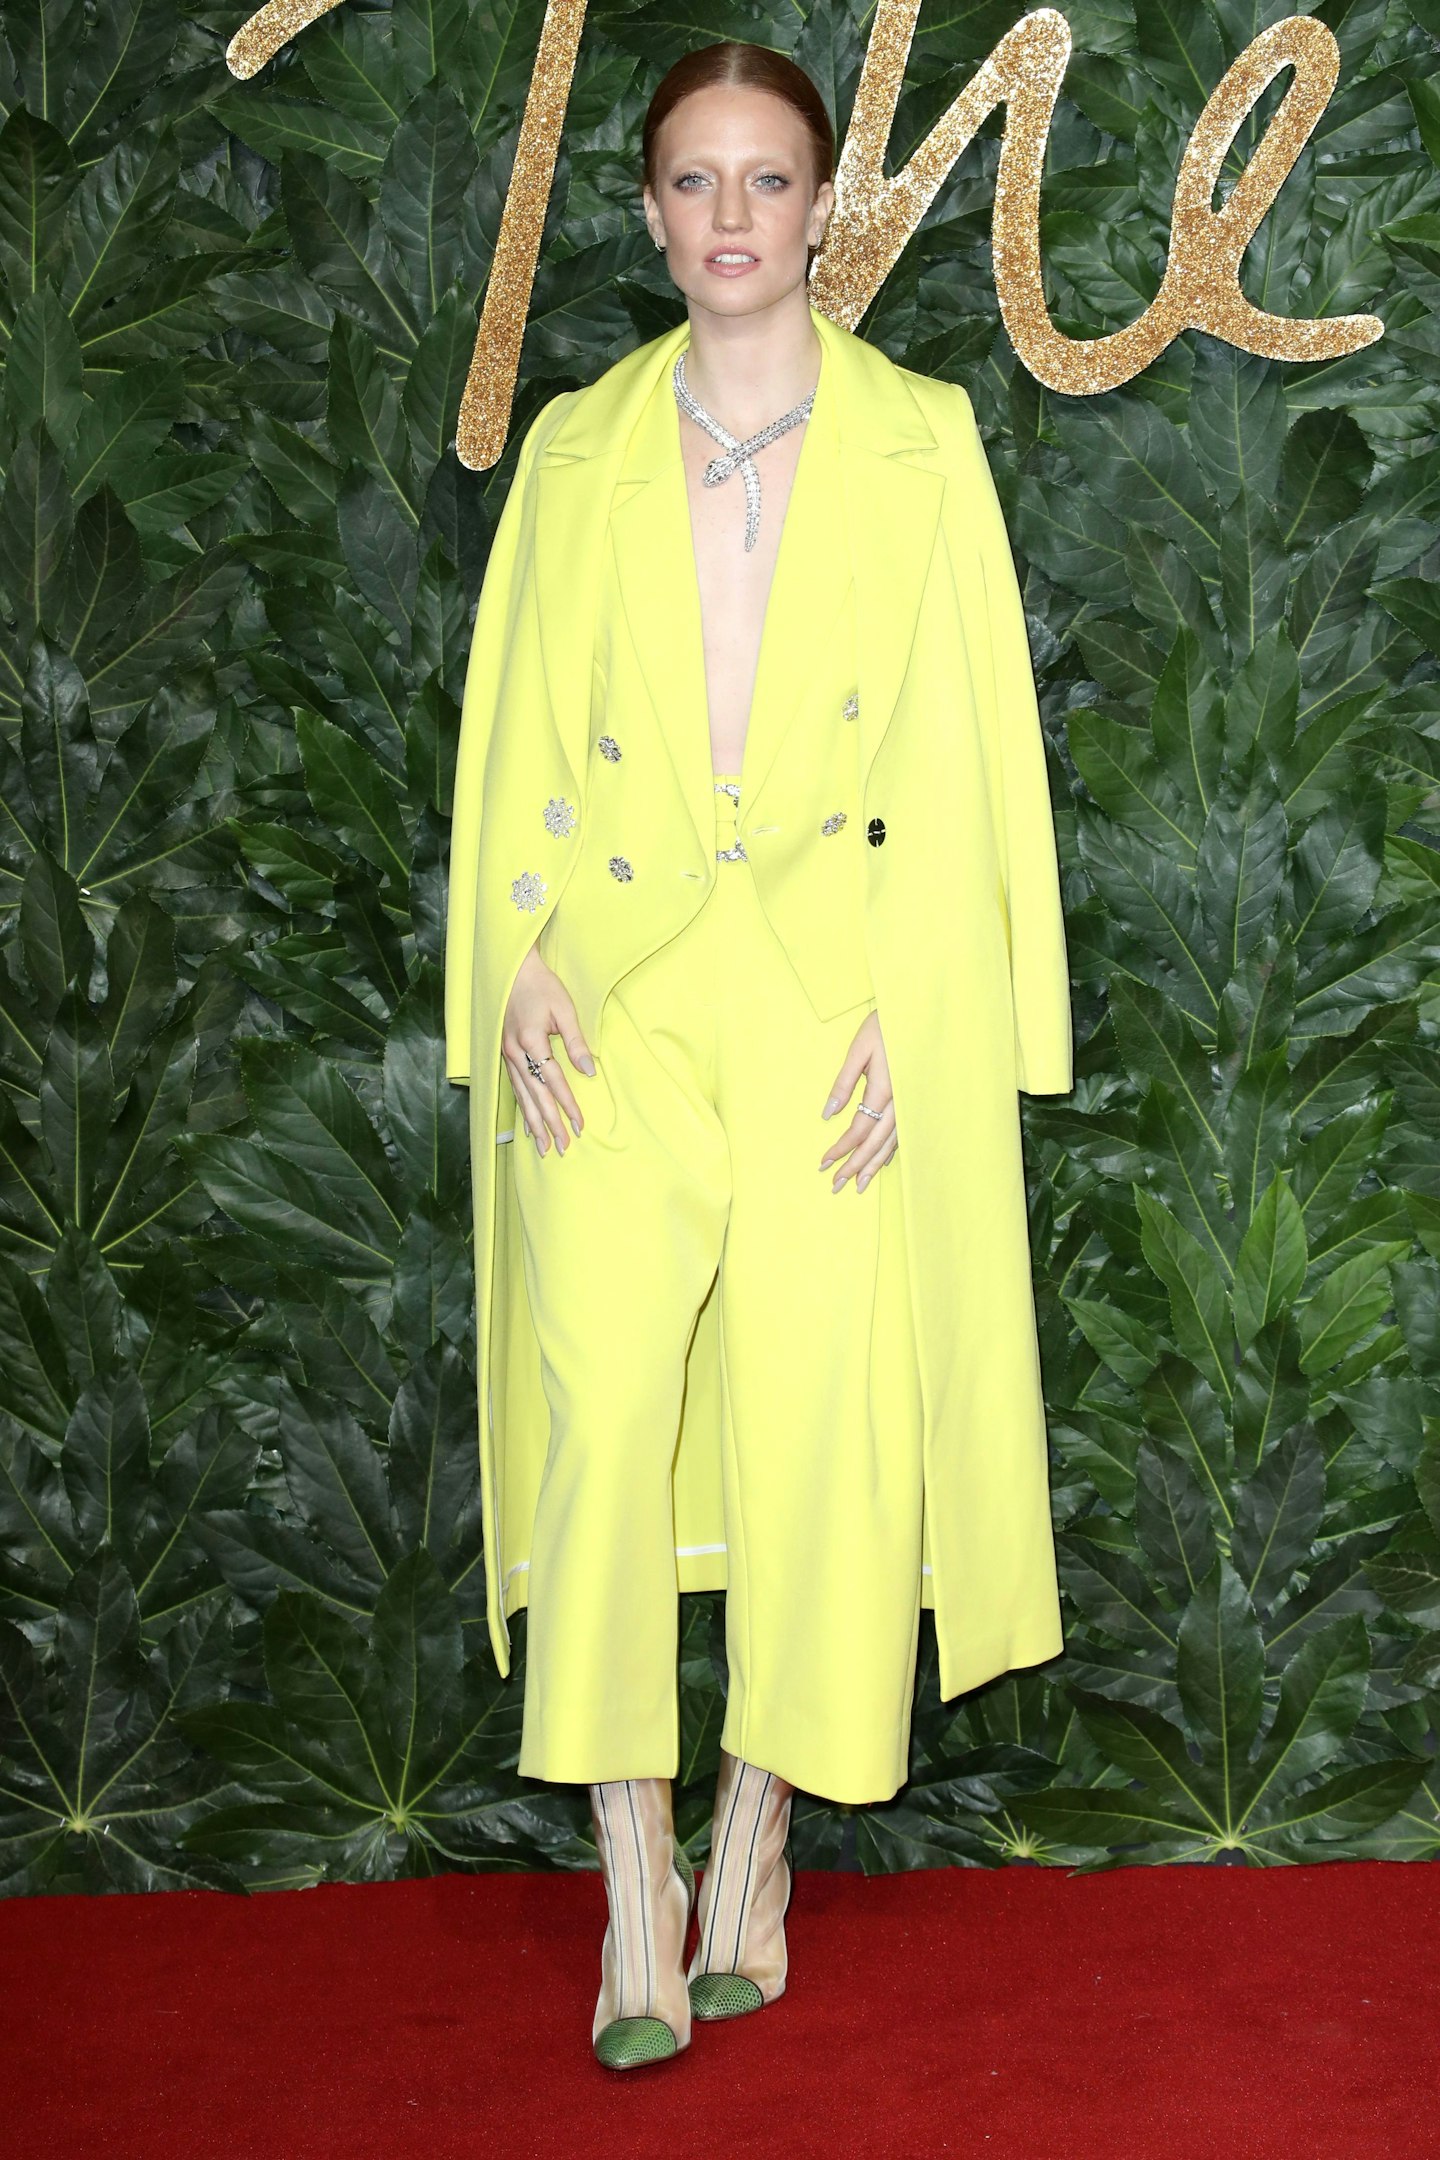 Jess Glynne at The Fashion Awards 2018